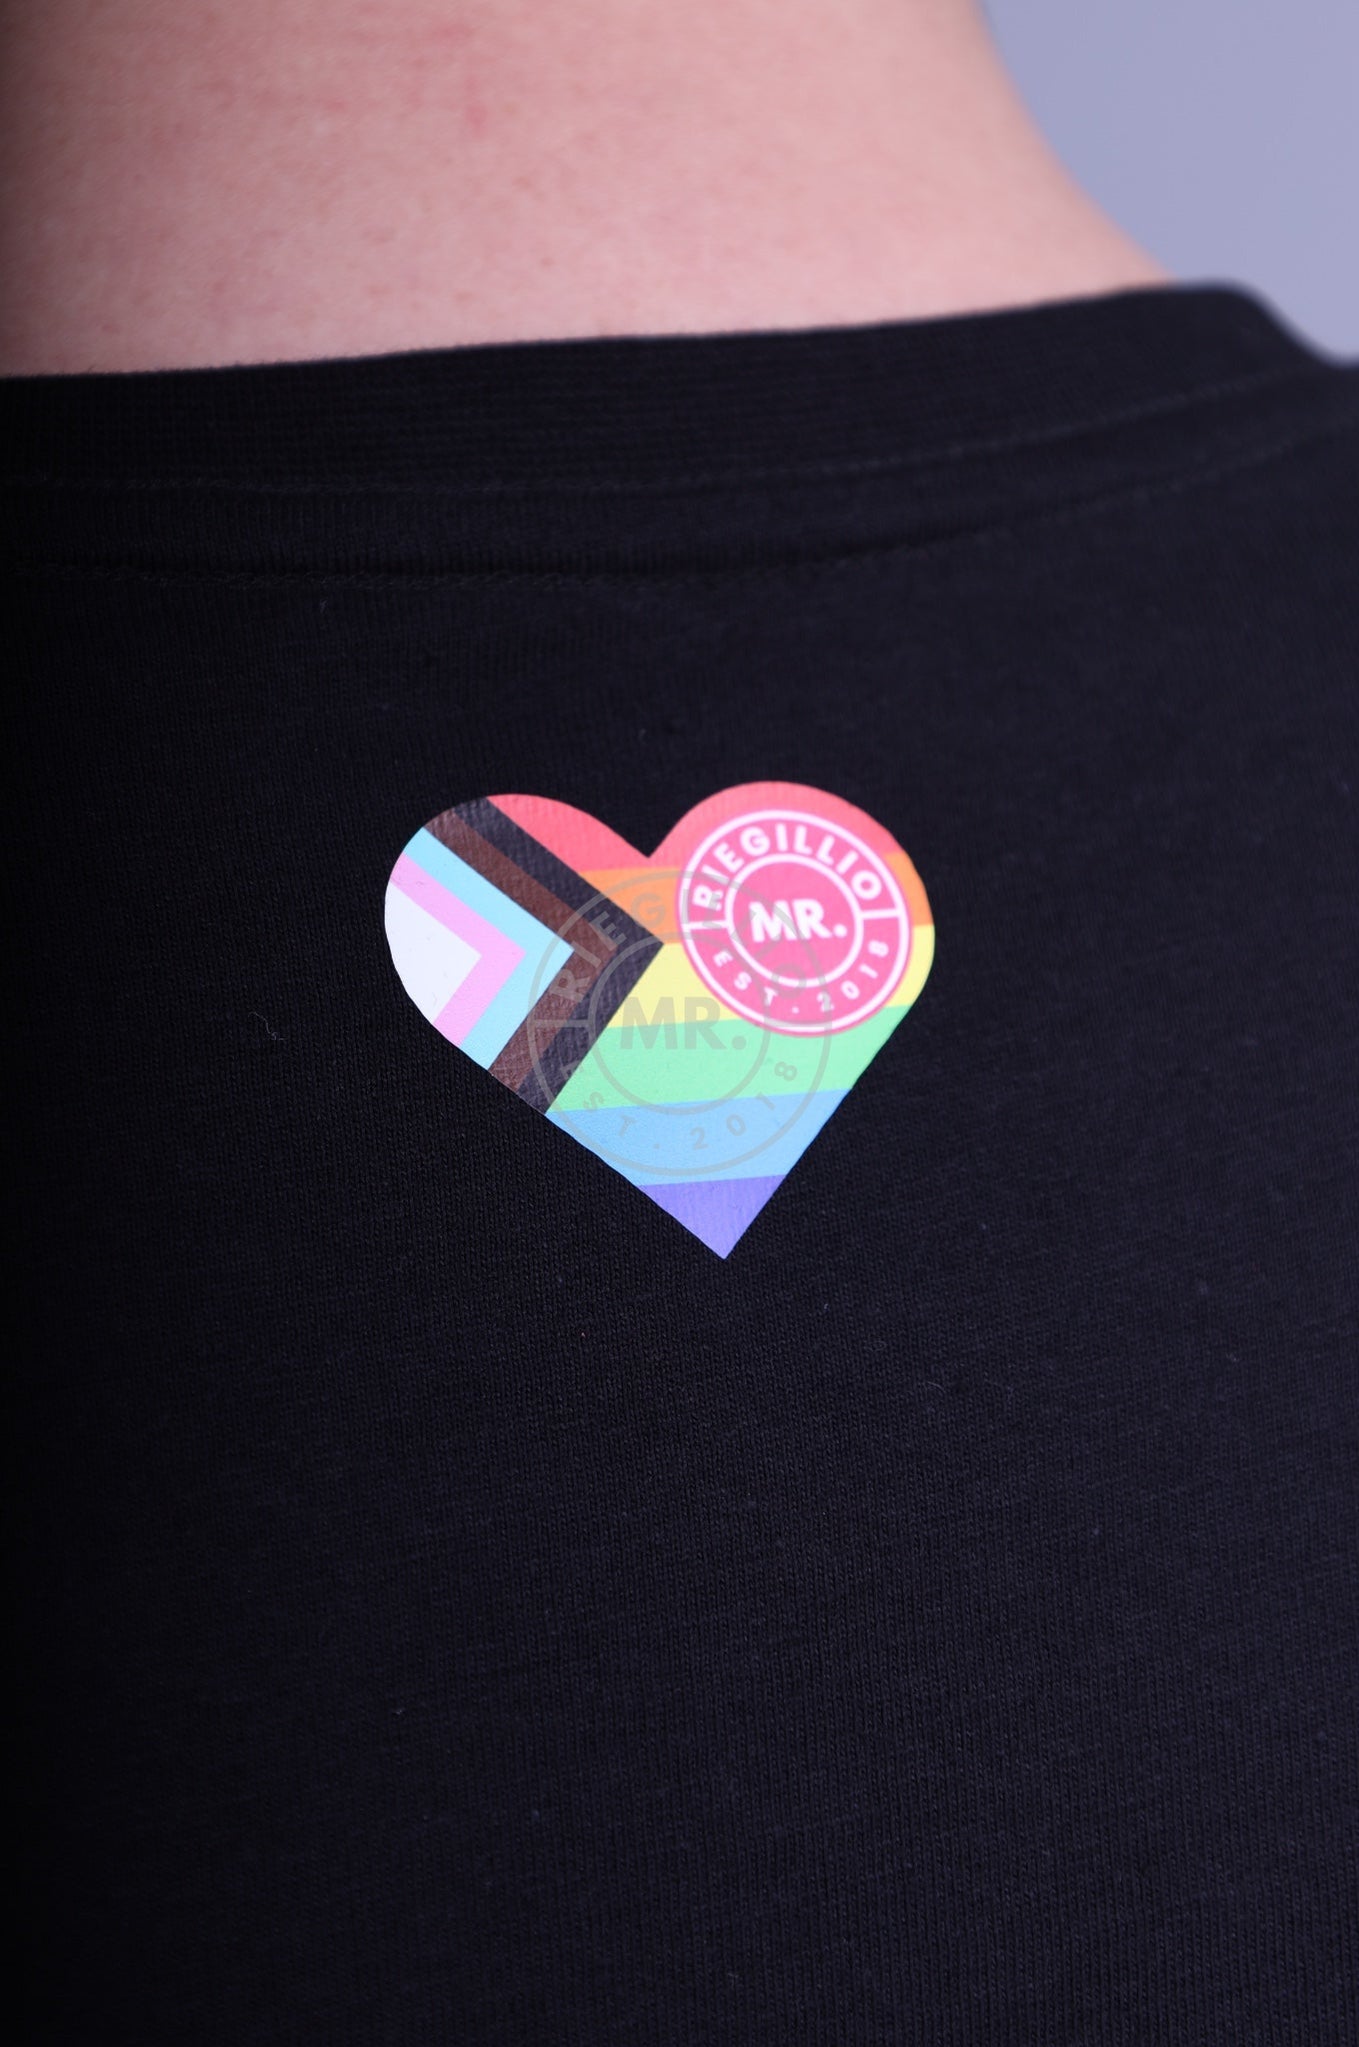 Pride Logo T-Shirt at MR. Riegillio